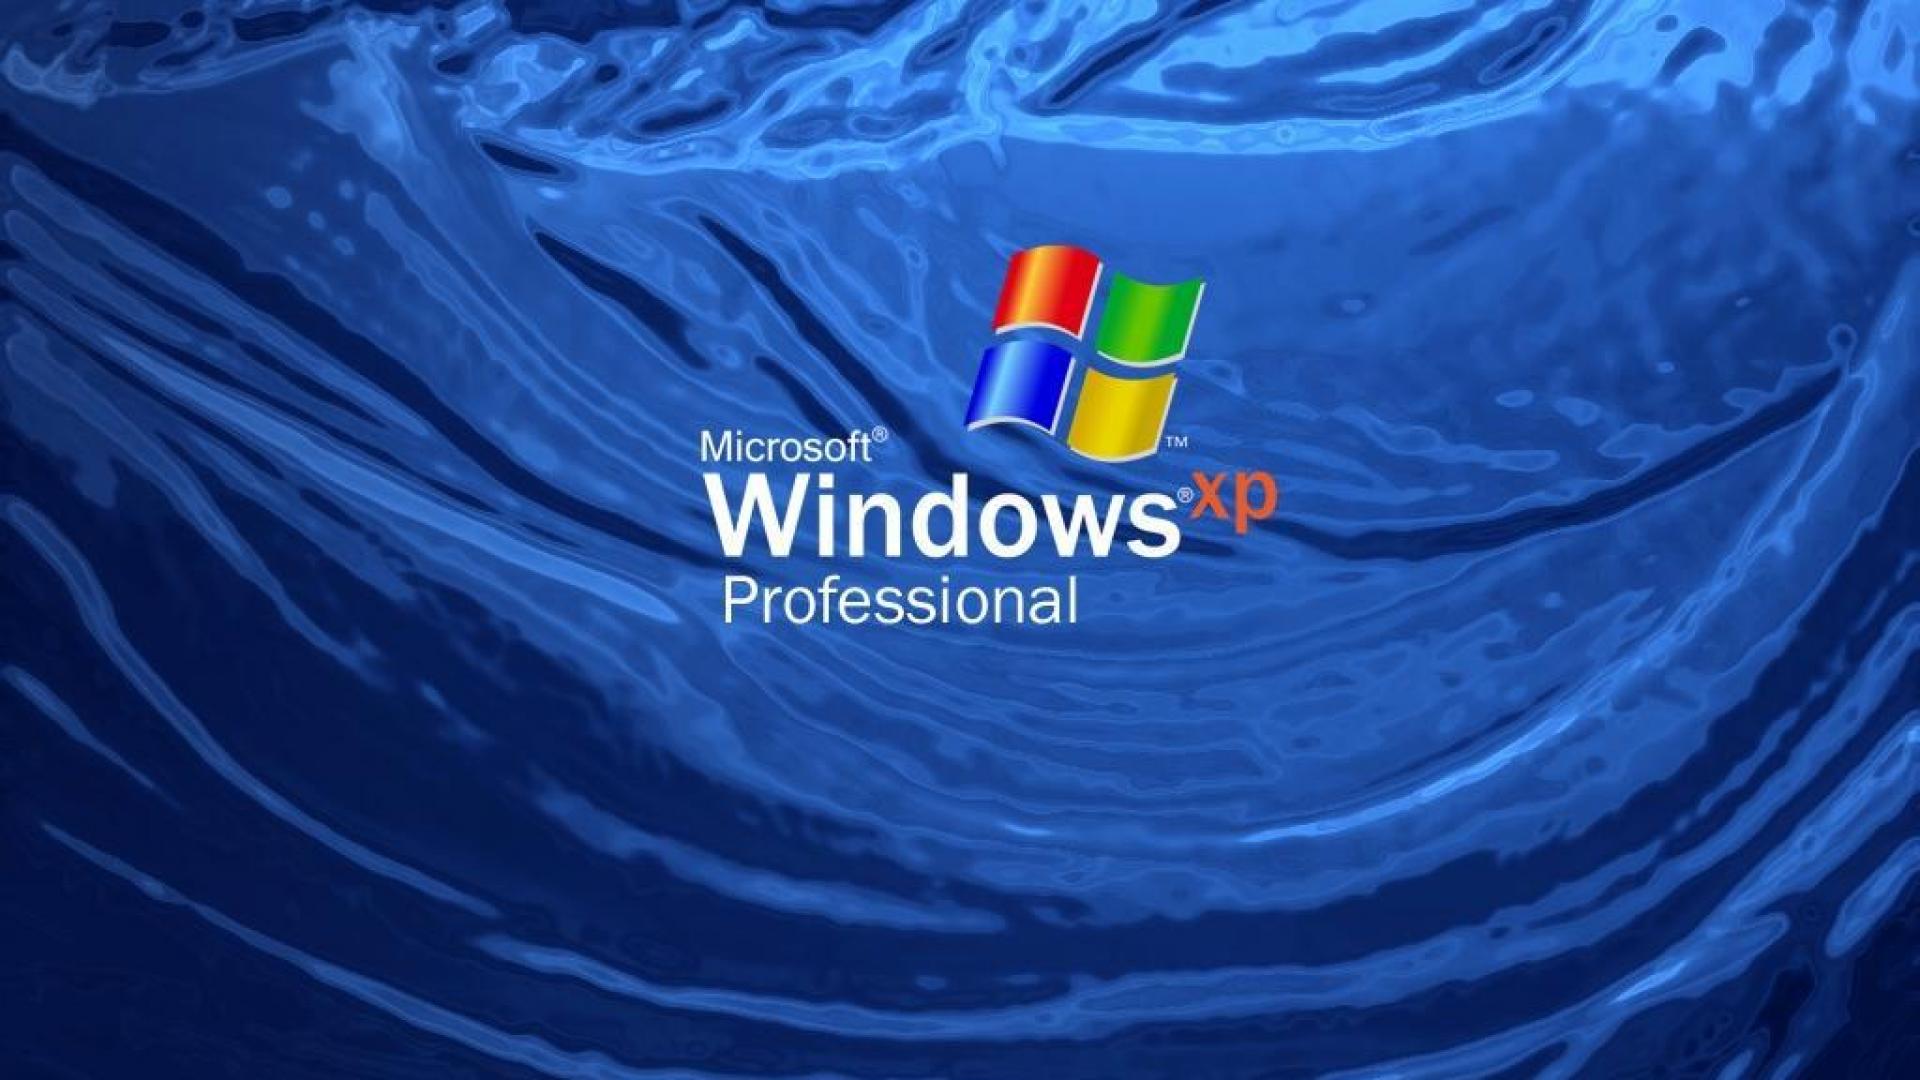 WINDOWS XP PROFESSIONAL WALLPAPER - (#27072) - HD Wallpapers ...